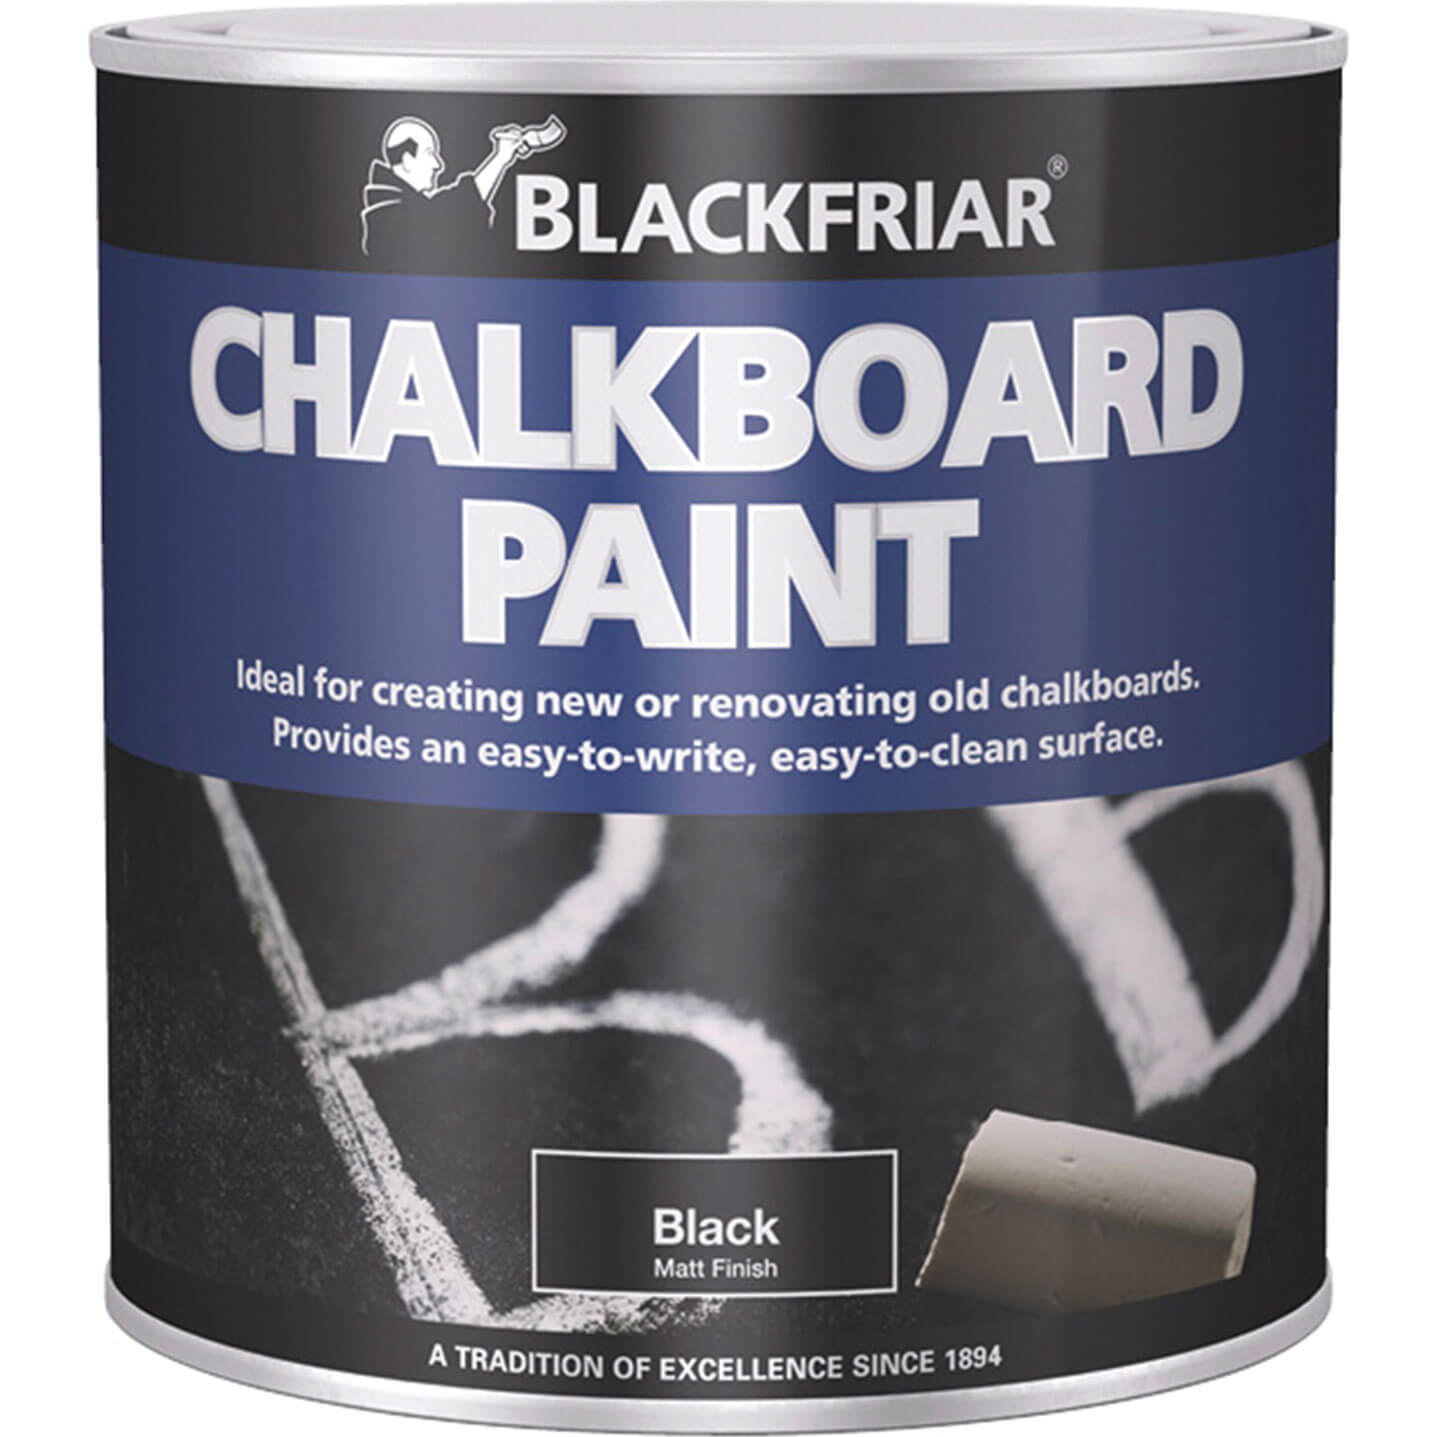 Image of Blackfriar Chalkboard Paint for Renovating or Creating Chalkboards Black 125ml